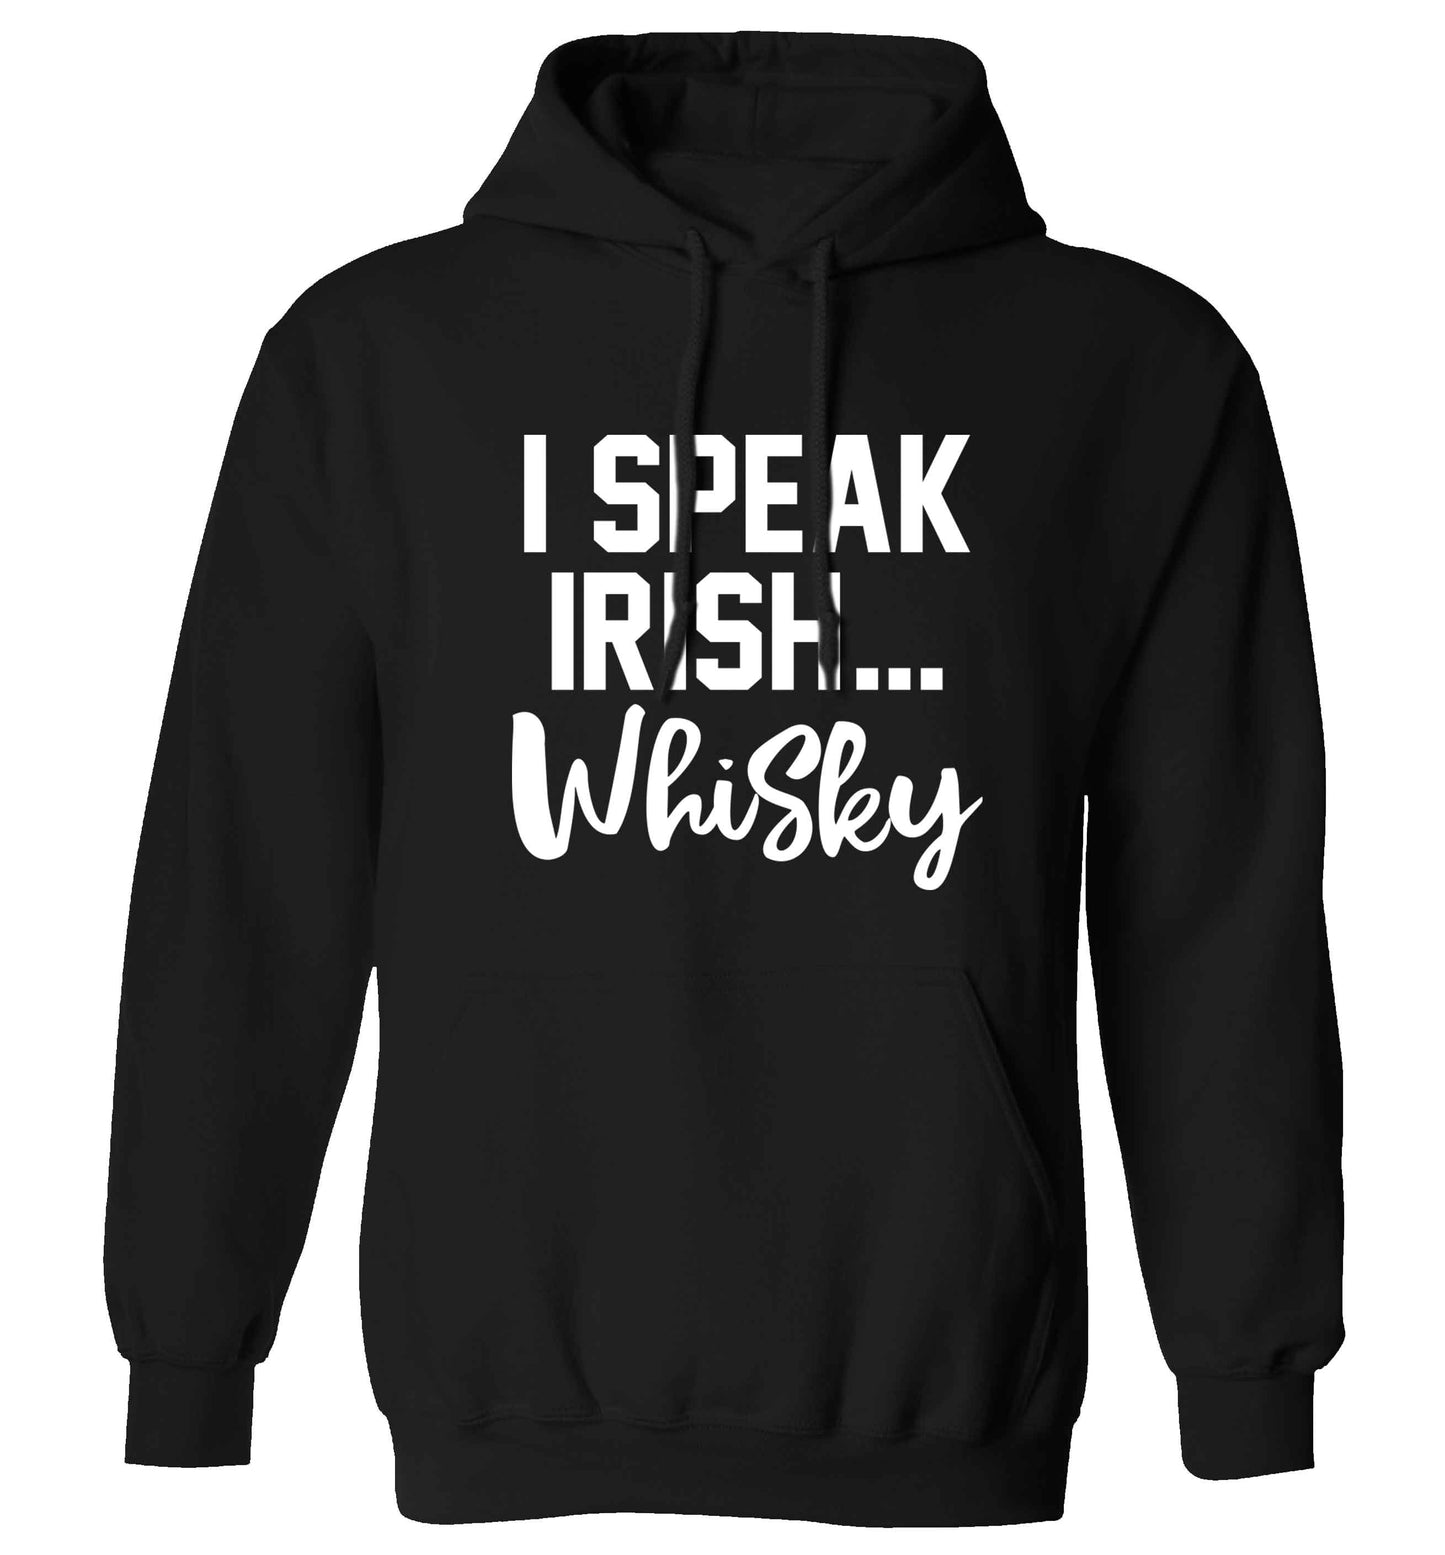 I speak Irish whisky adults unisex black hoodie 2XL